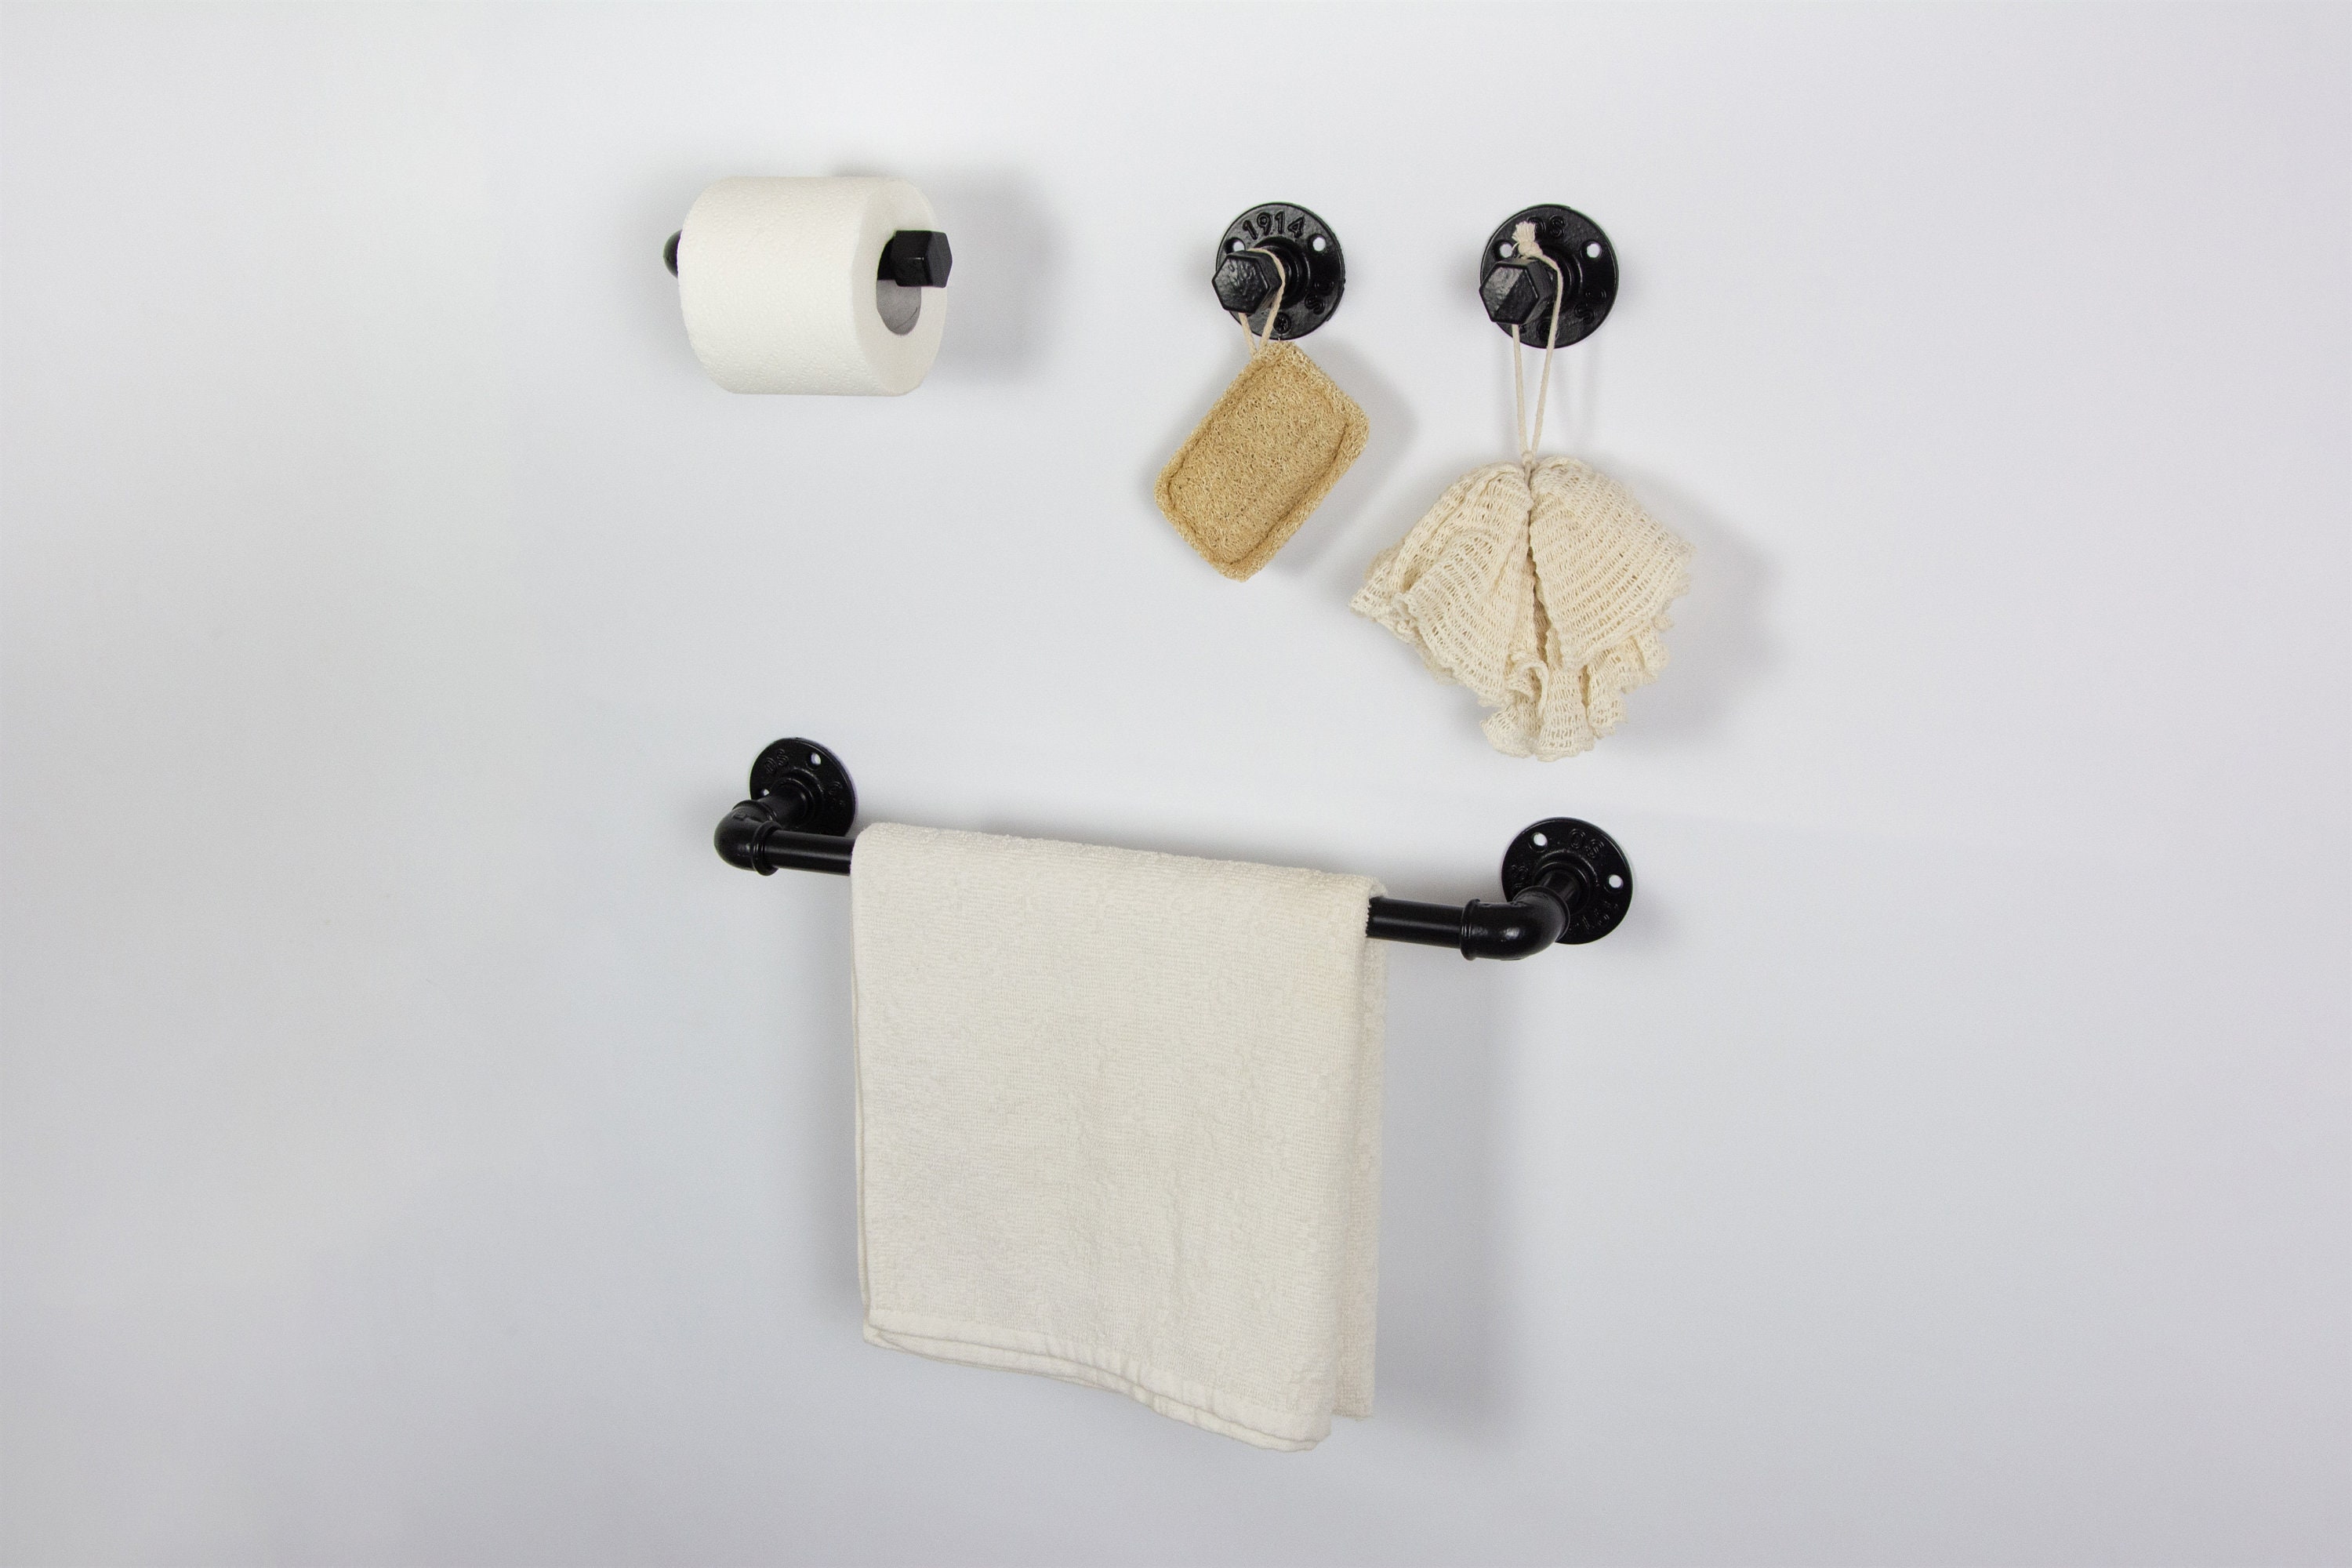 Matt Black Modern Bathroom Wall Accessories Toilet Roll Paper Holder Towel  Rack